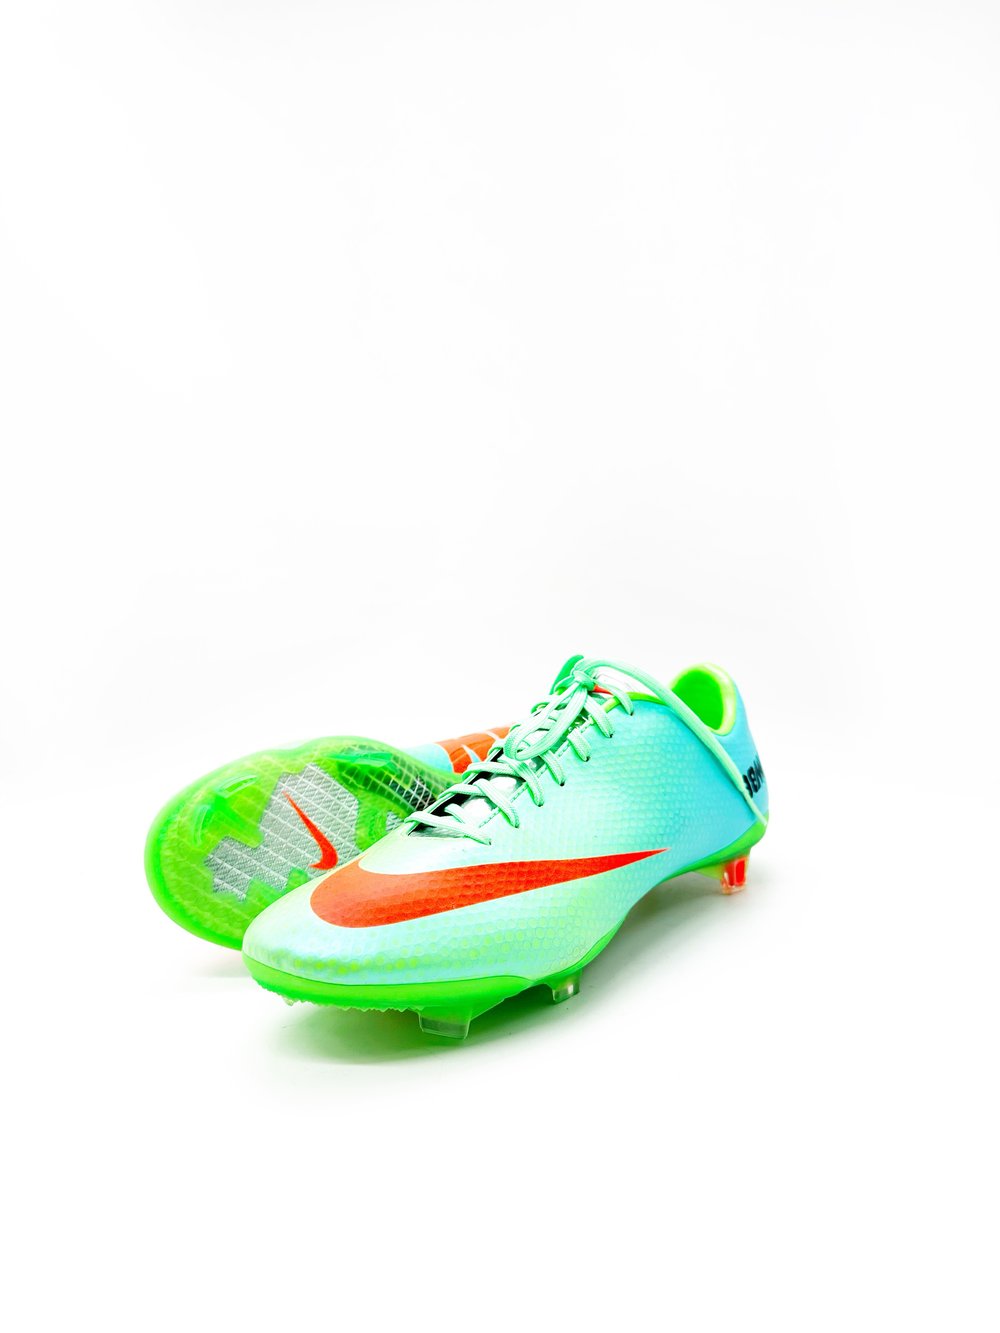 Image of Nike Vapor IX FG Green